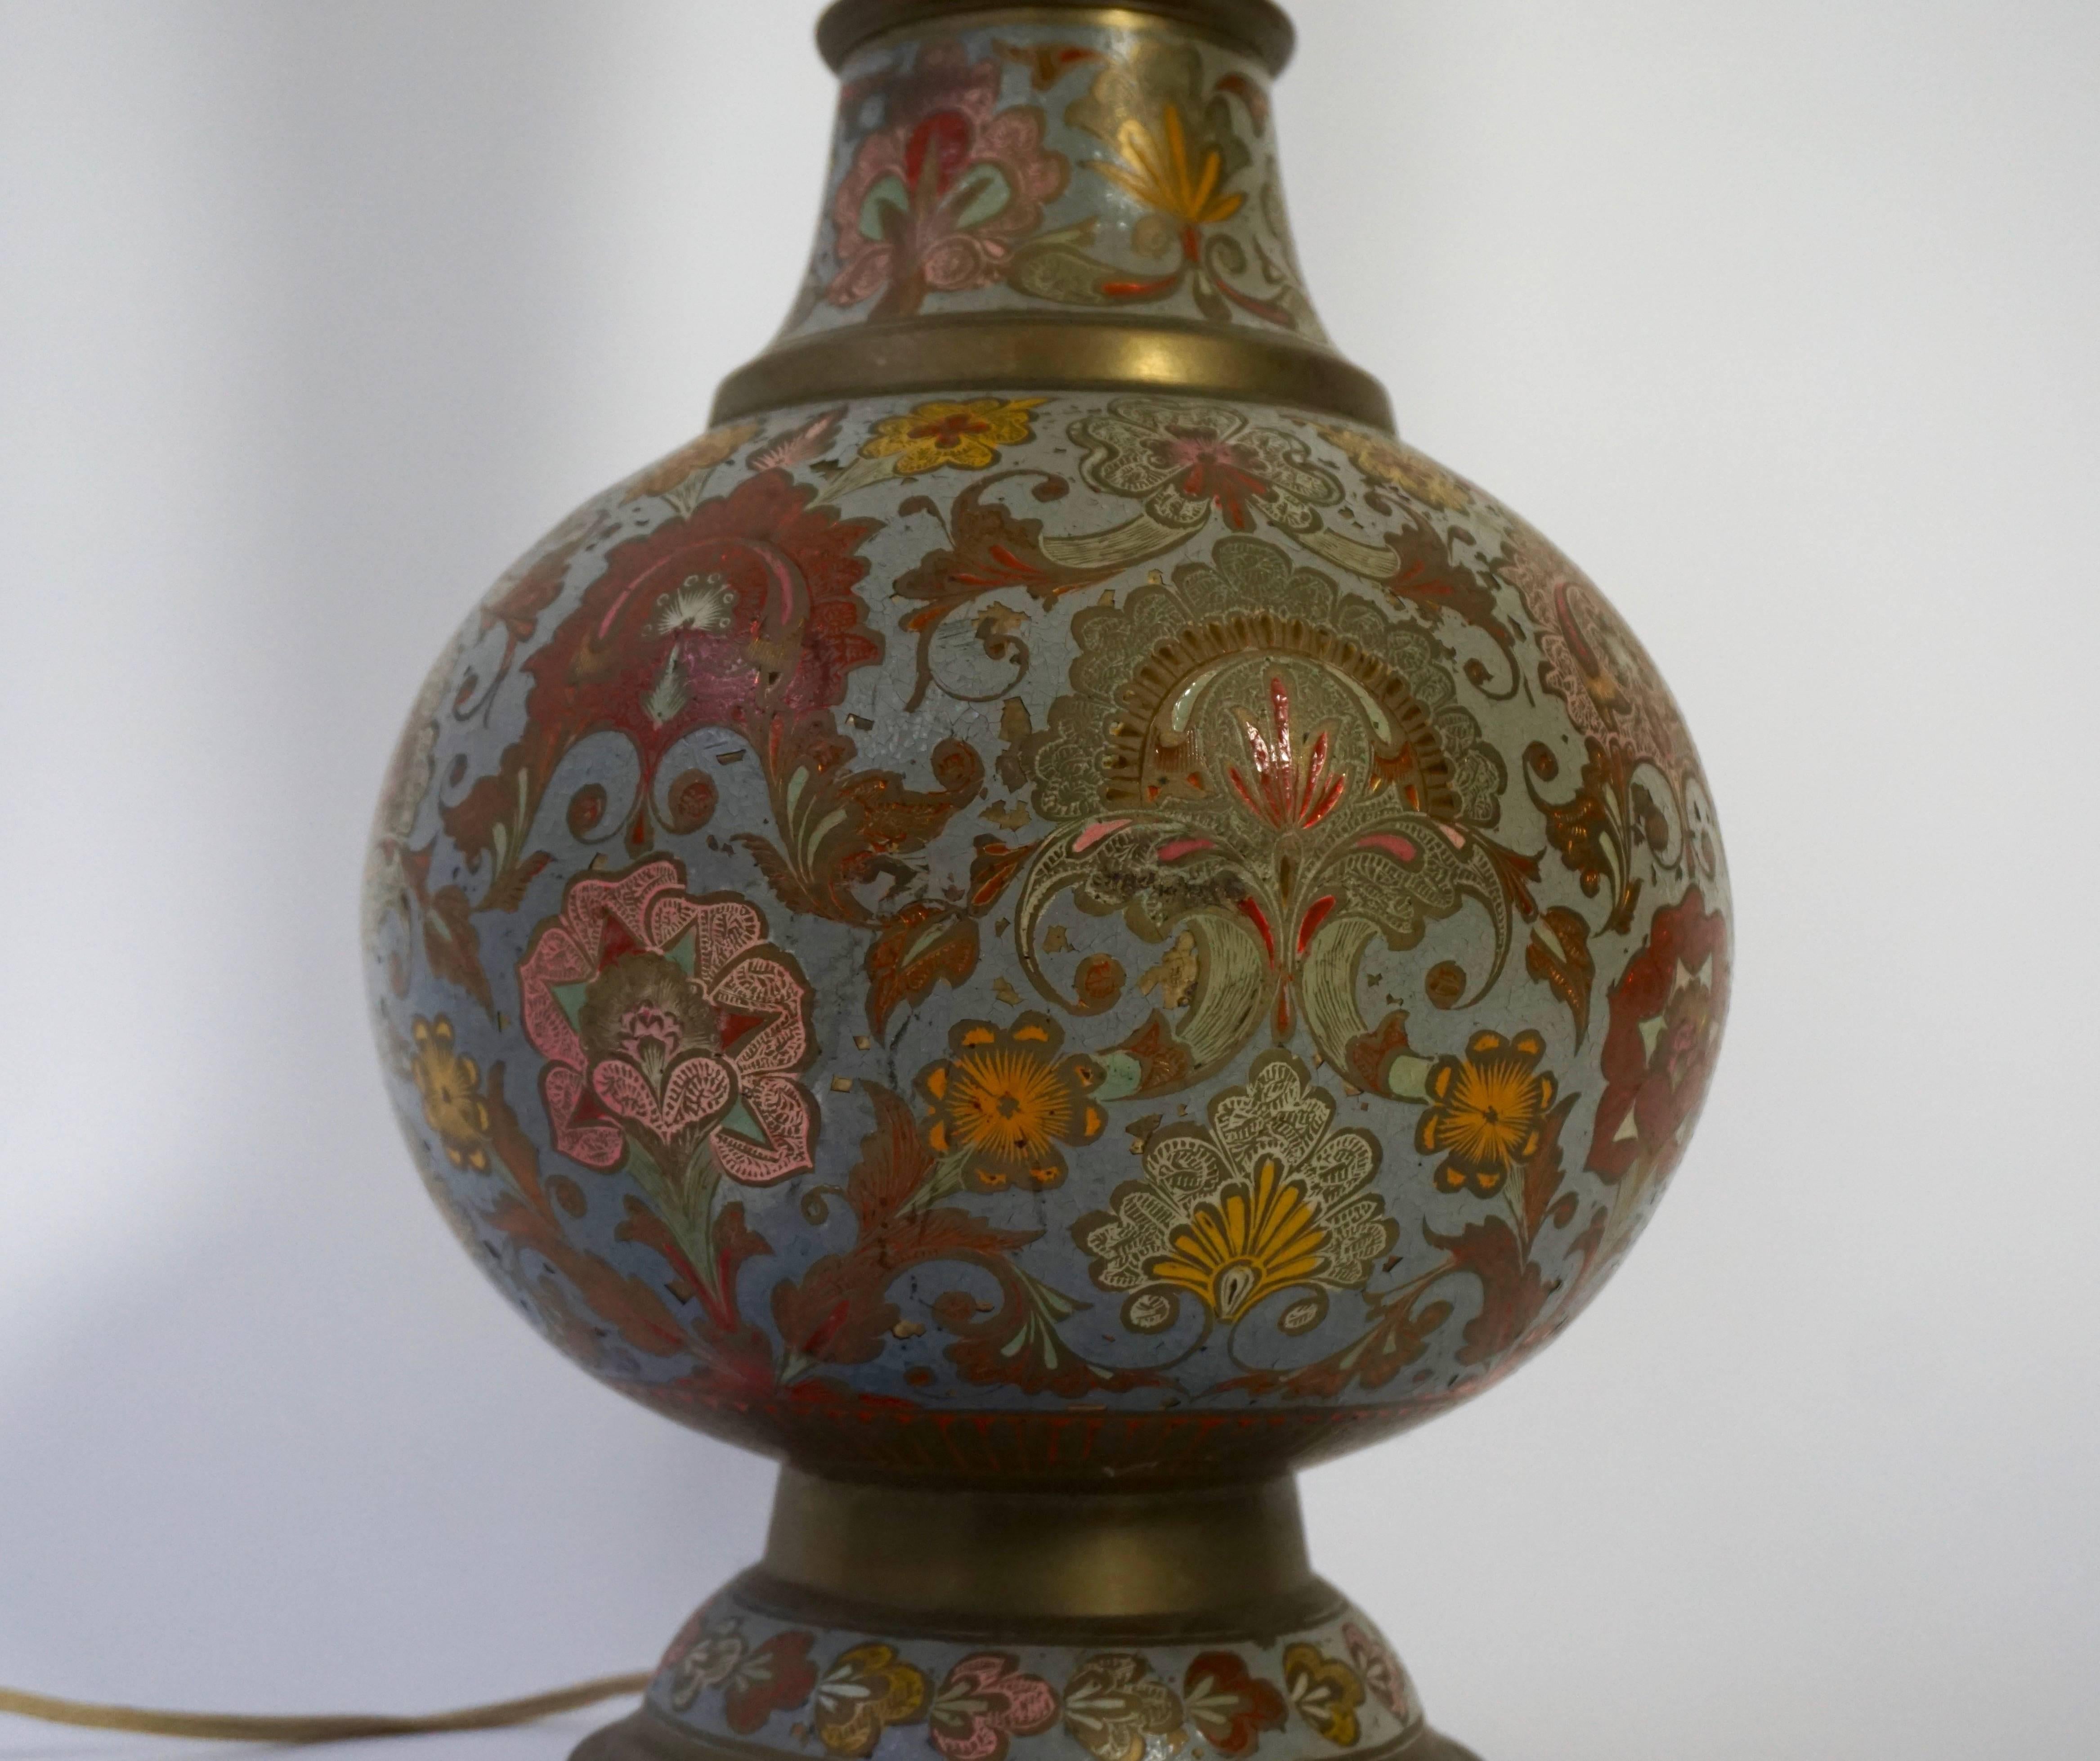 Brass Elegant Cloisonné with Floral Motif Table or Floor Lamp